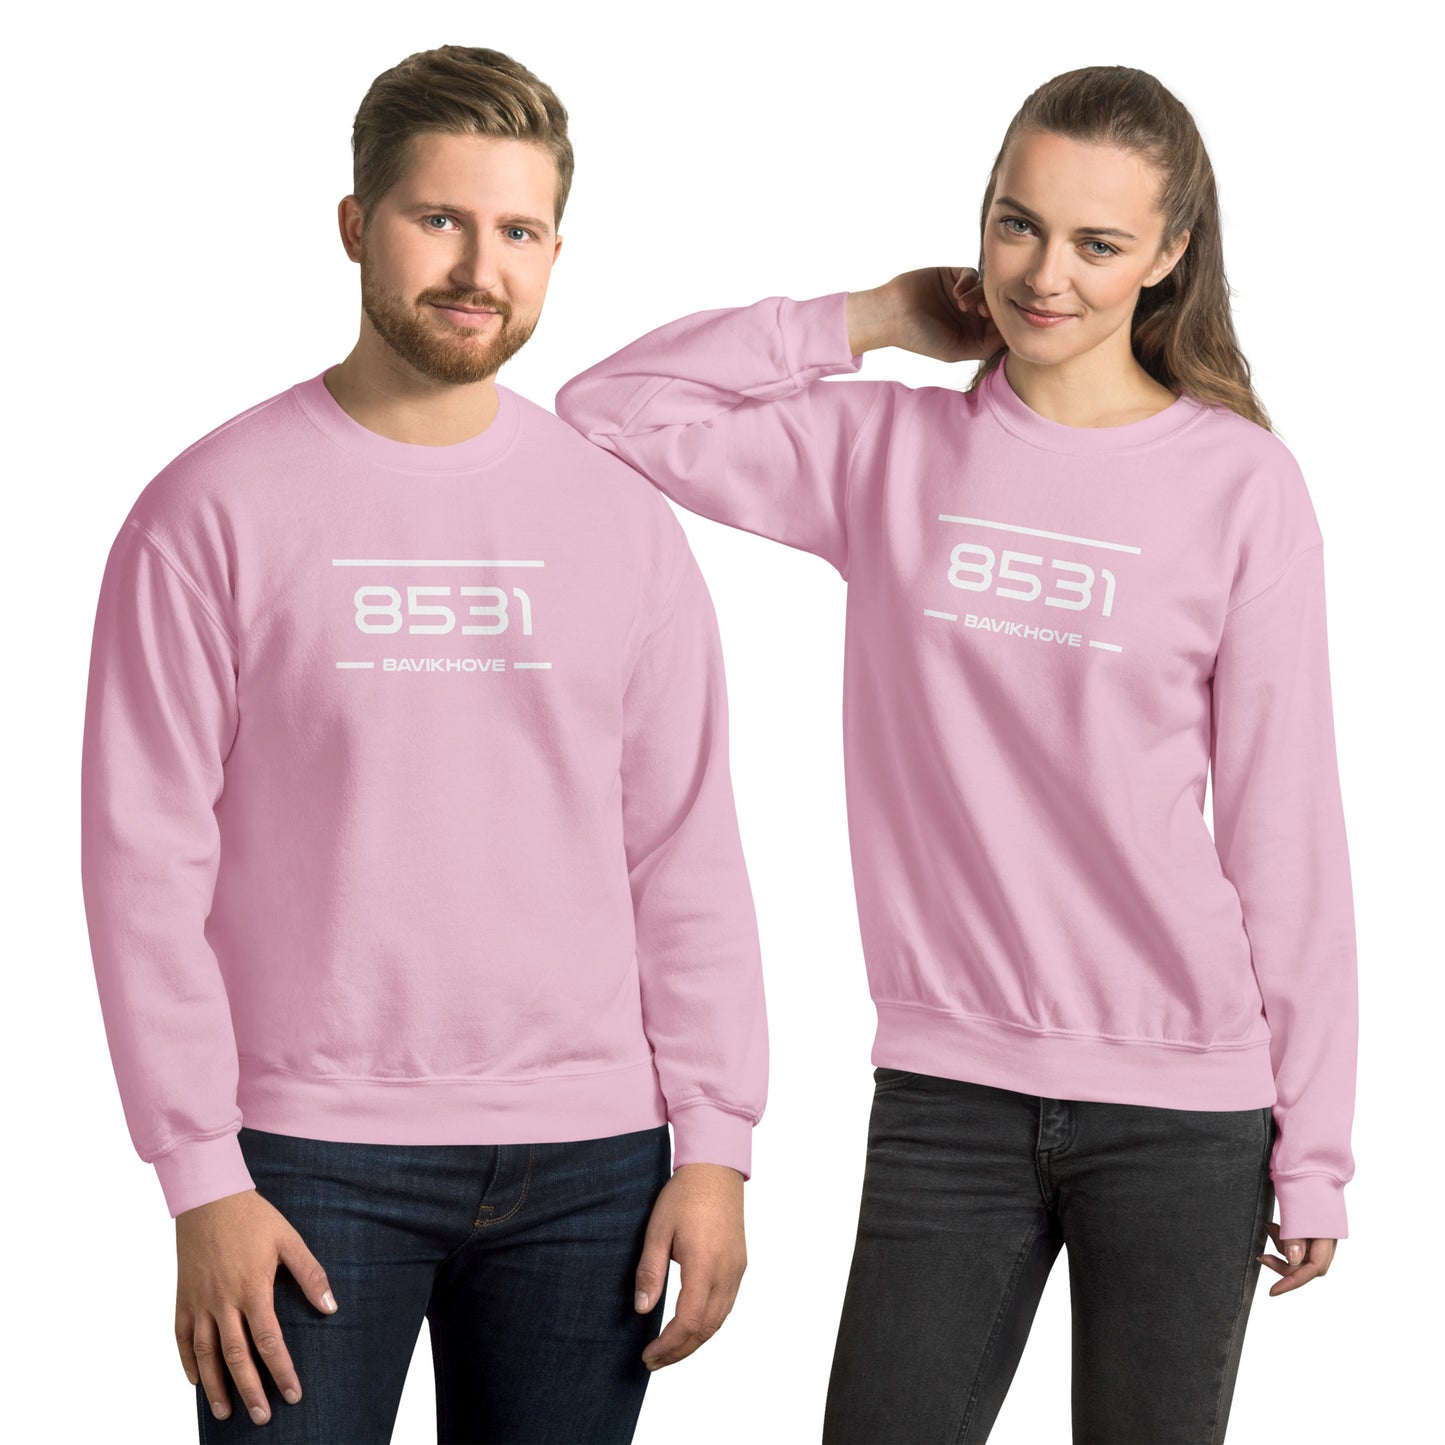 Sweater - 8531 - Bavikhove (M/V)